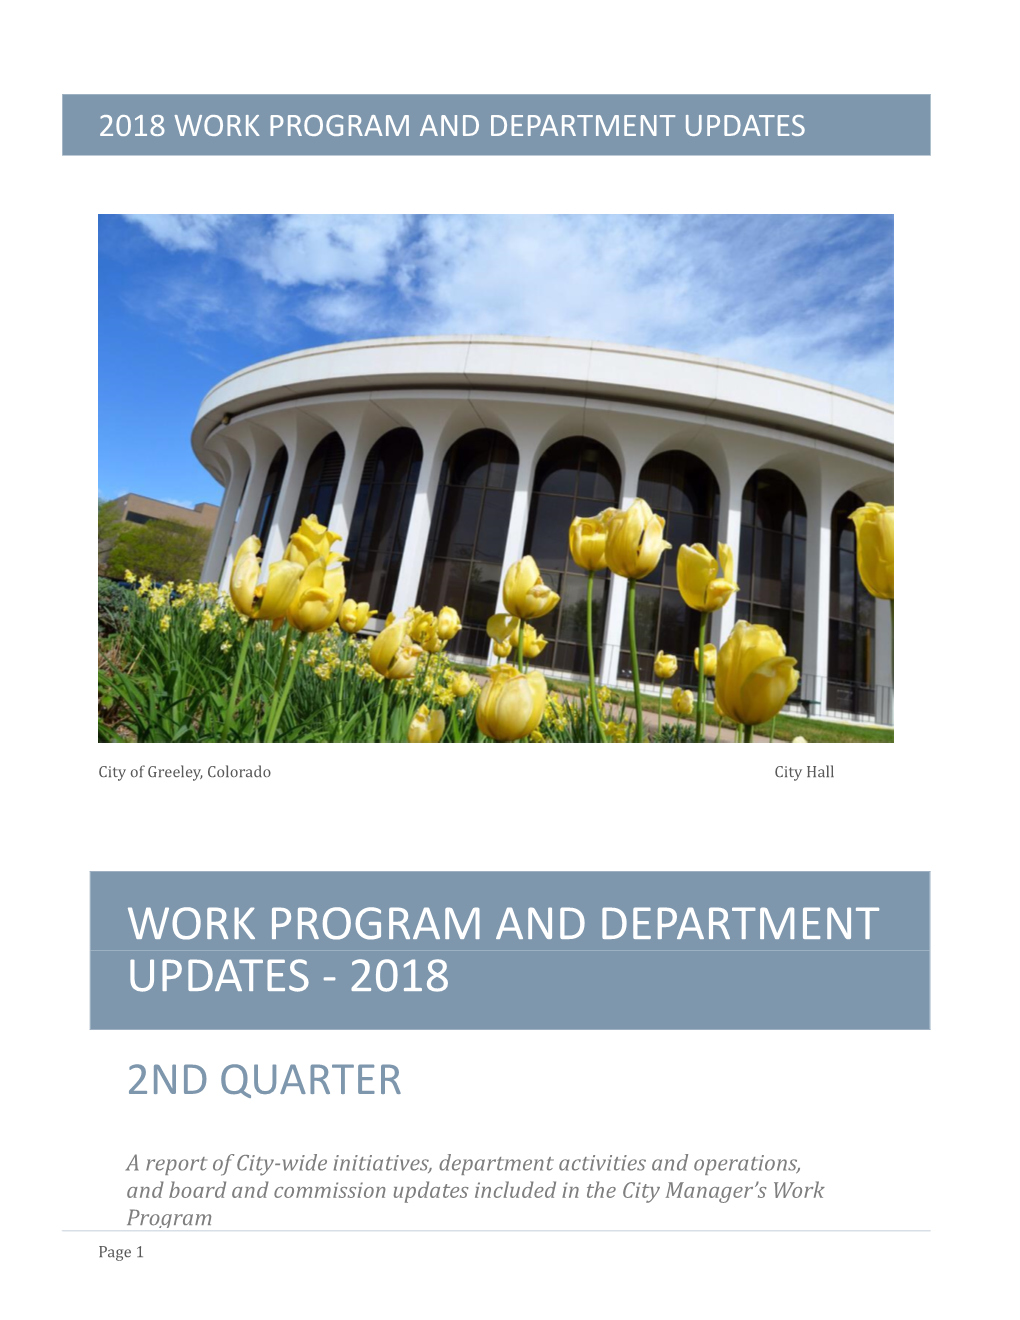 2Nd Quarter Work Program and Department Updates 2018